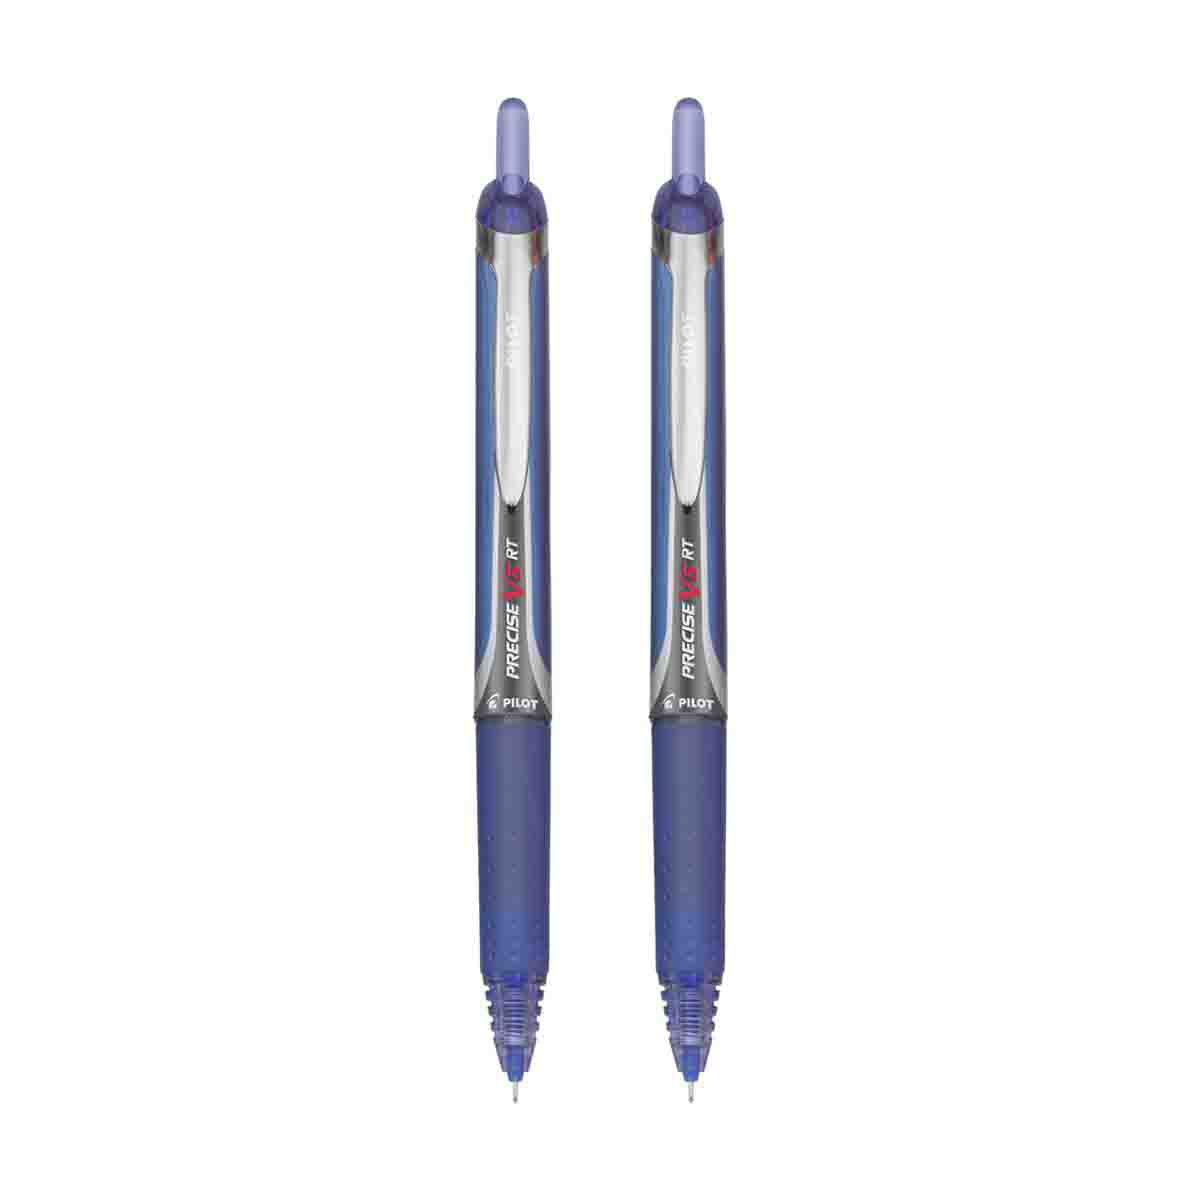 Pilot FriXion Fineliner Marker Pen, Fine Tip, Erasable, 2 Counts